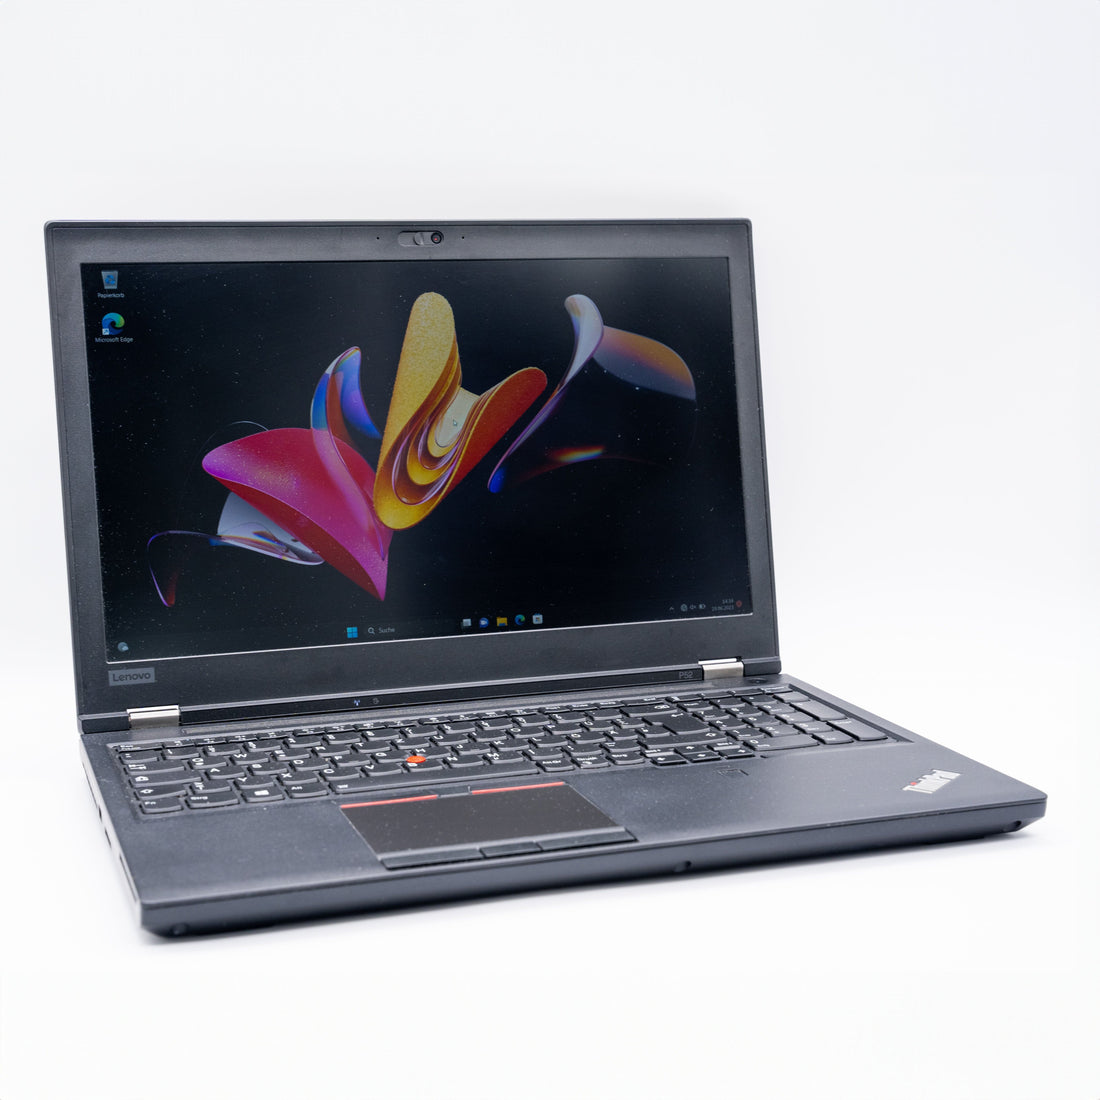 Lenovo ThinkPad P51 32GB RAM Intel Xeon E3-1505M NVIDIA QUADRO M2200 Laptops Notebook-Pro 